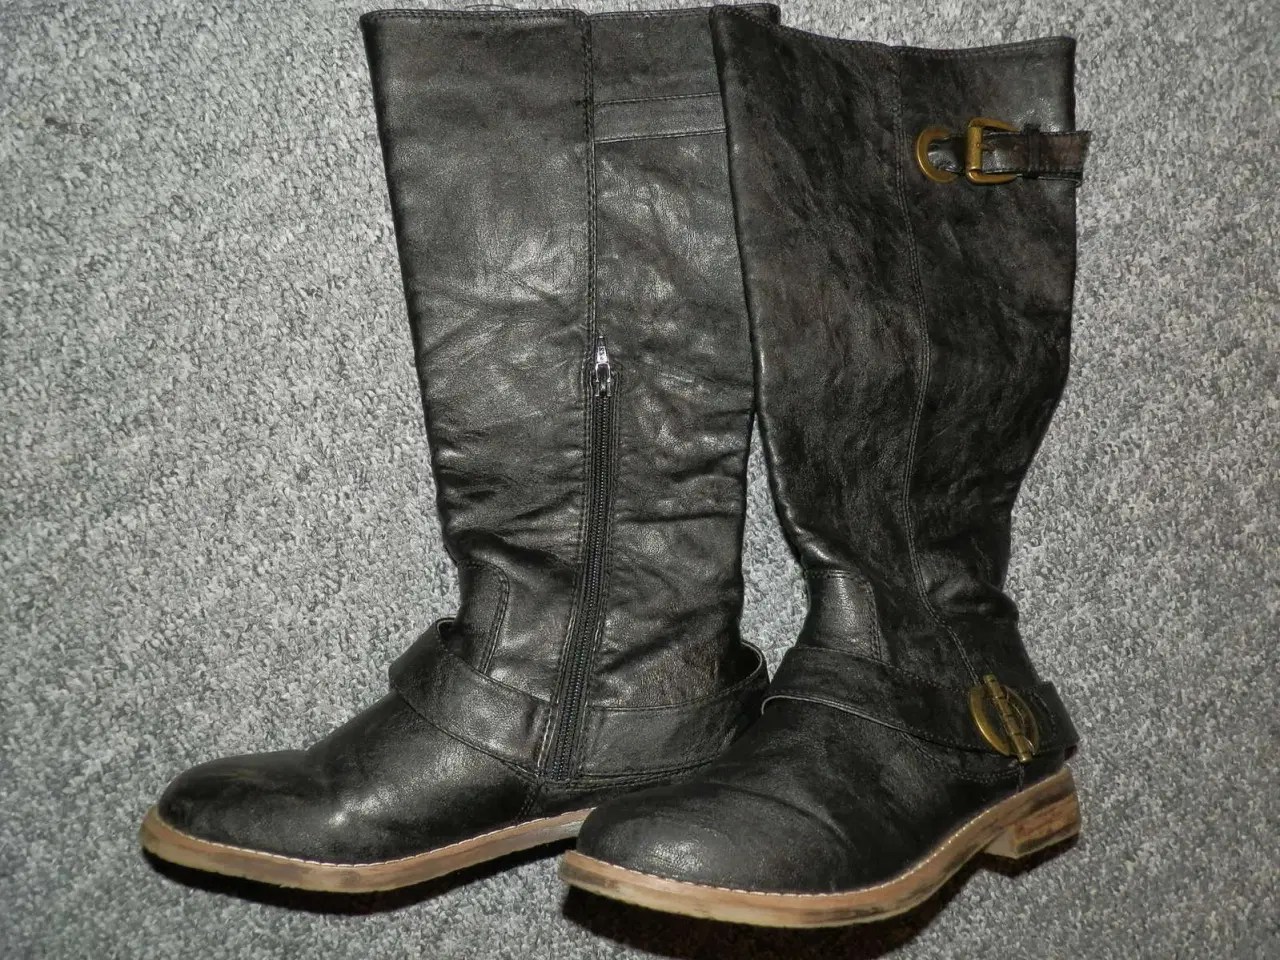 Billede 1 - Brune støvler med lynlås og rågummisål